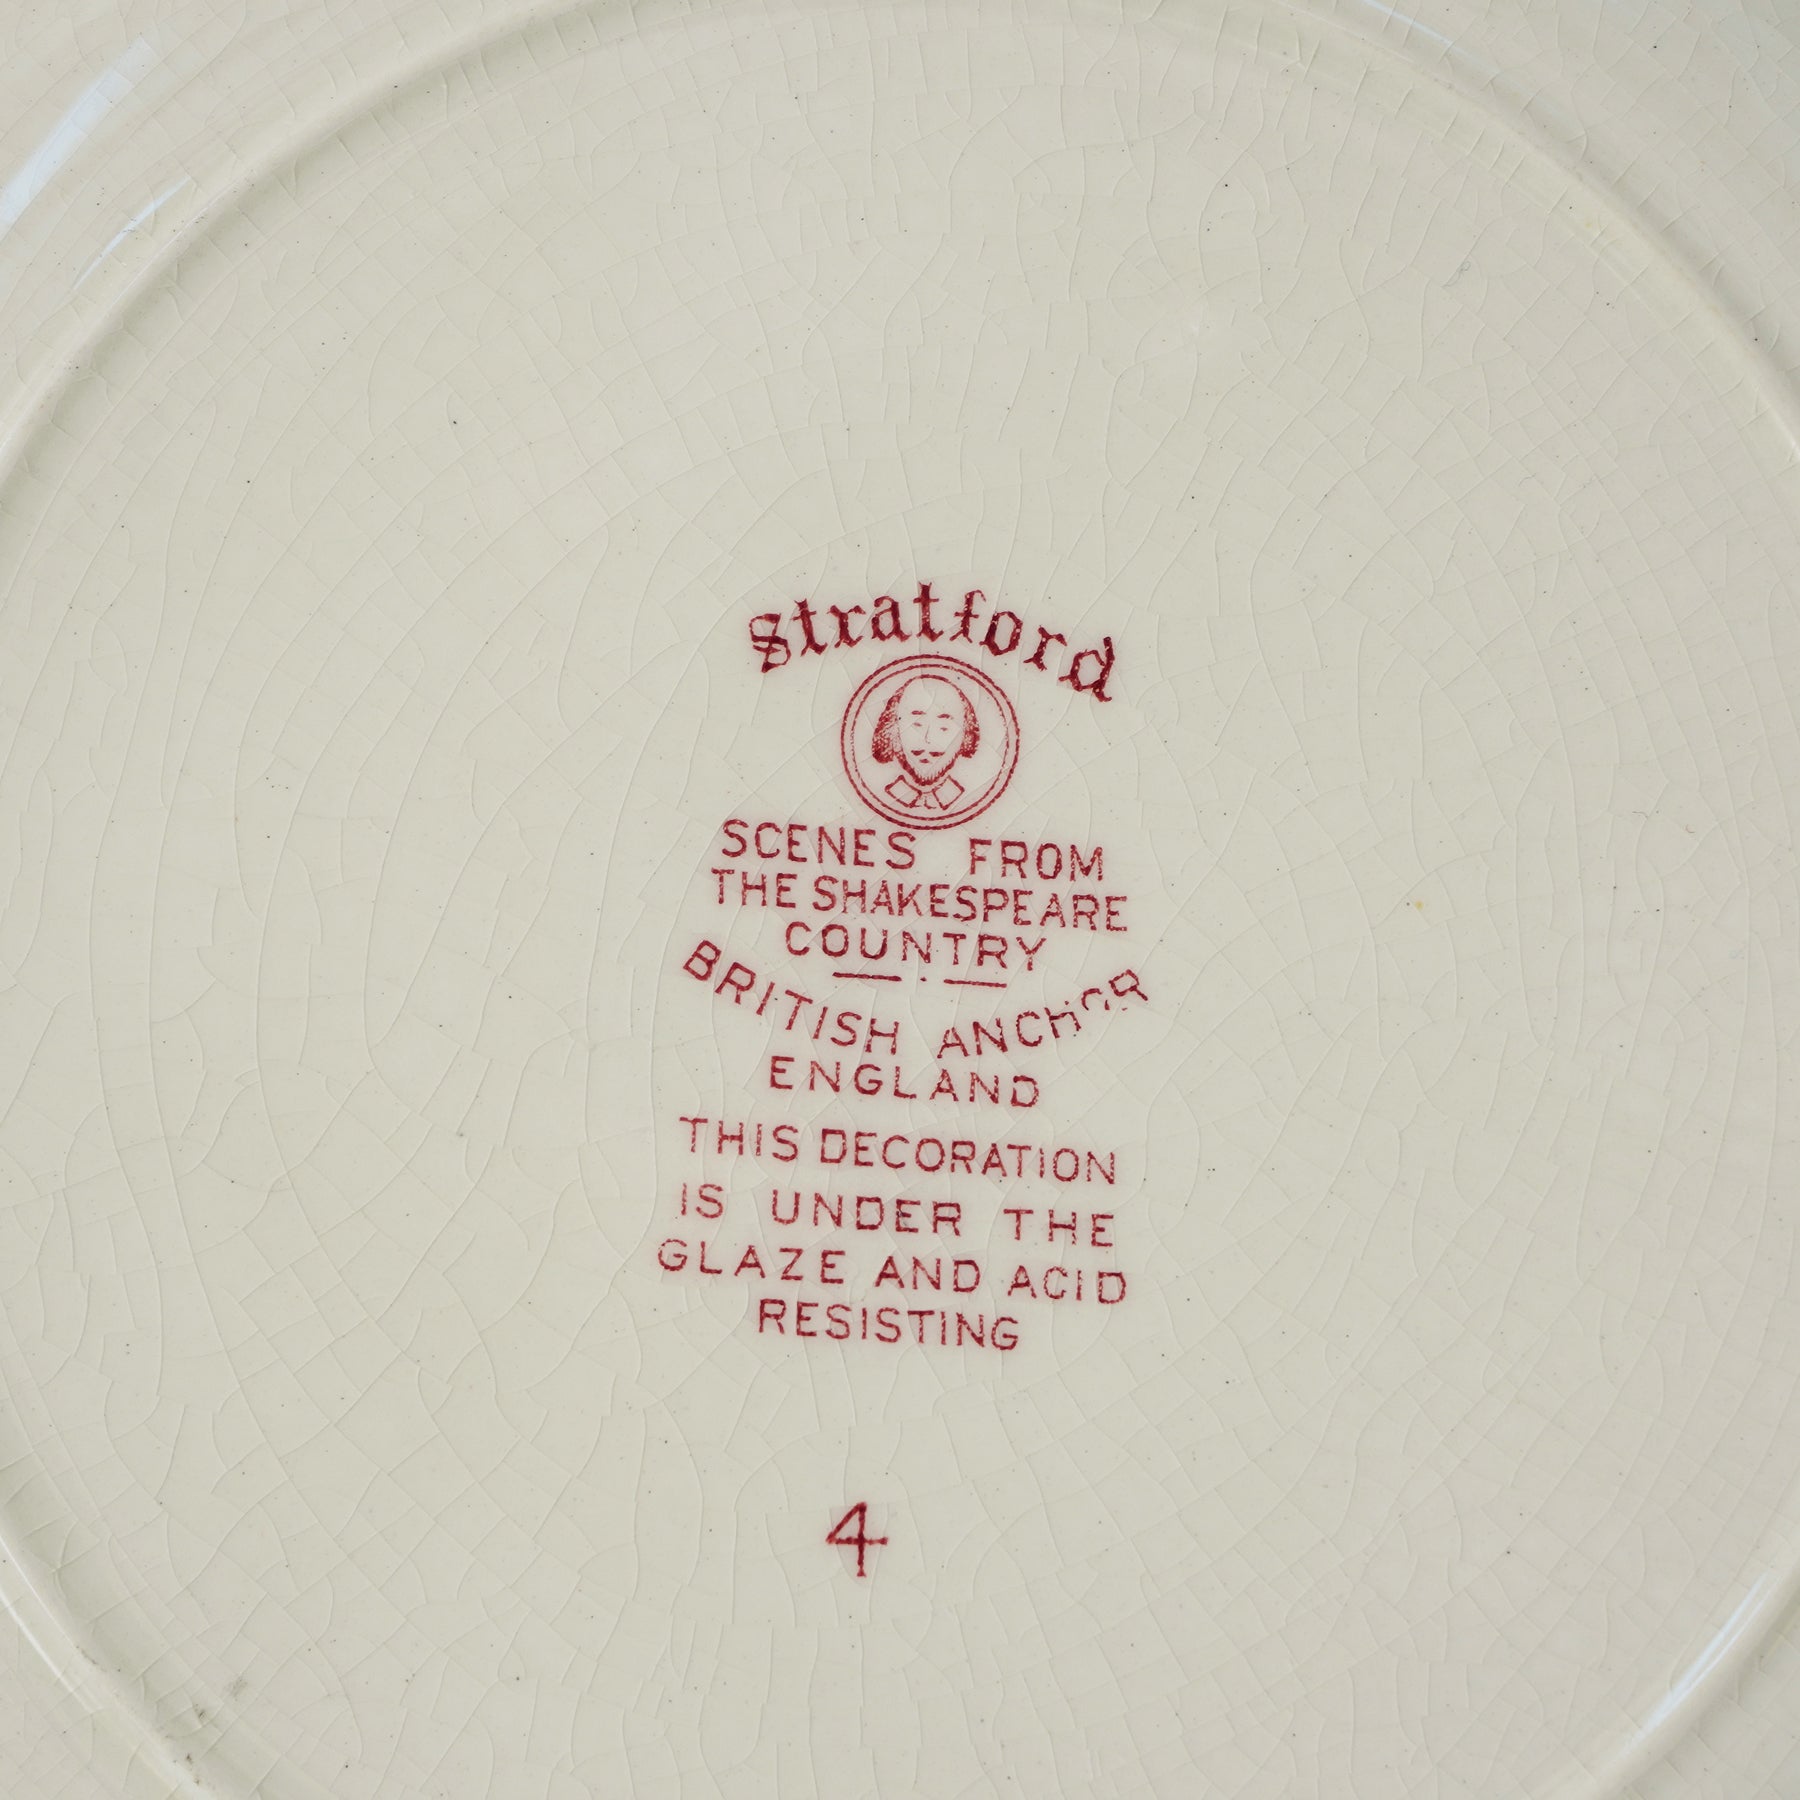 C.1950s British Anchor Plate / 英国製 ブリティッシュアンカー 絵皿 – thepostoffice.jp